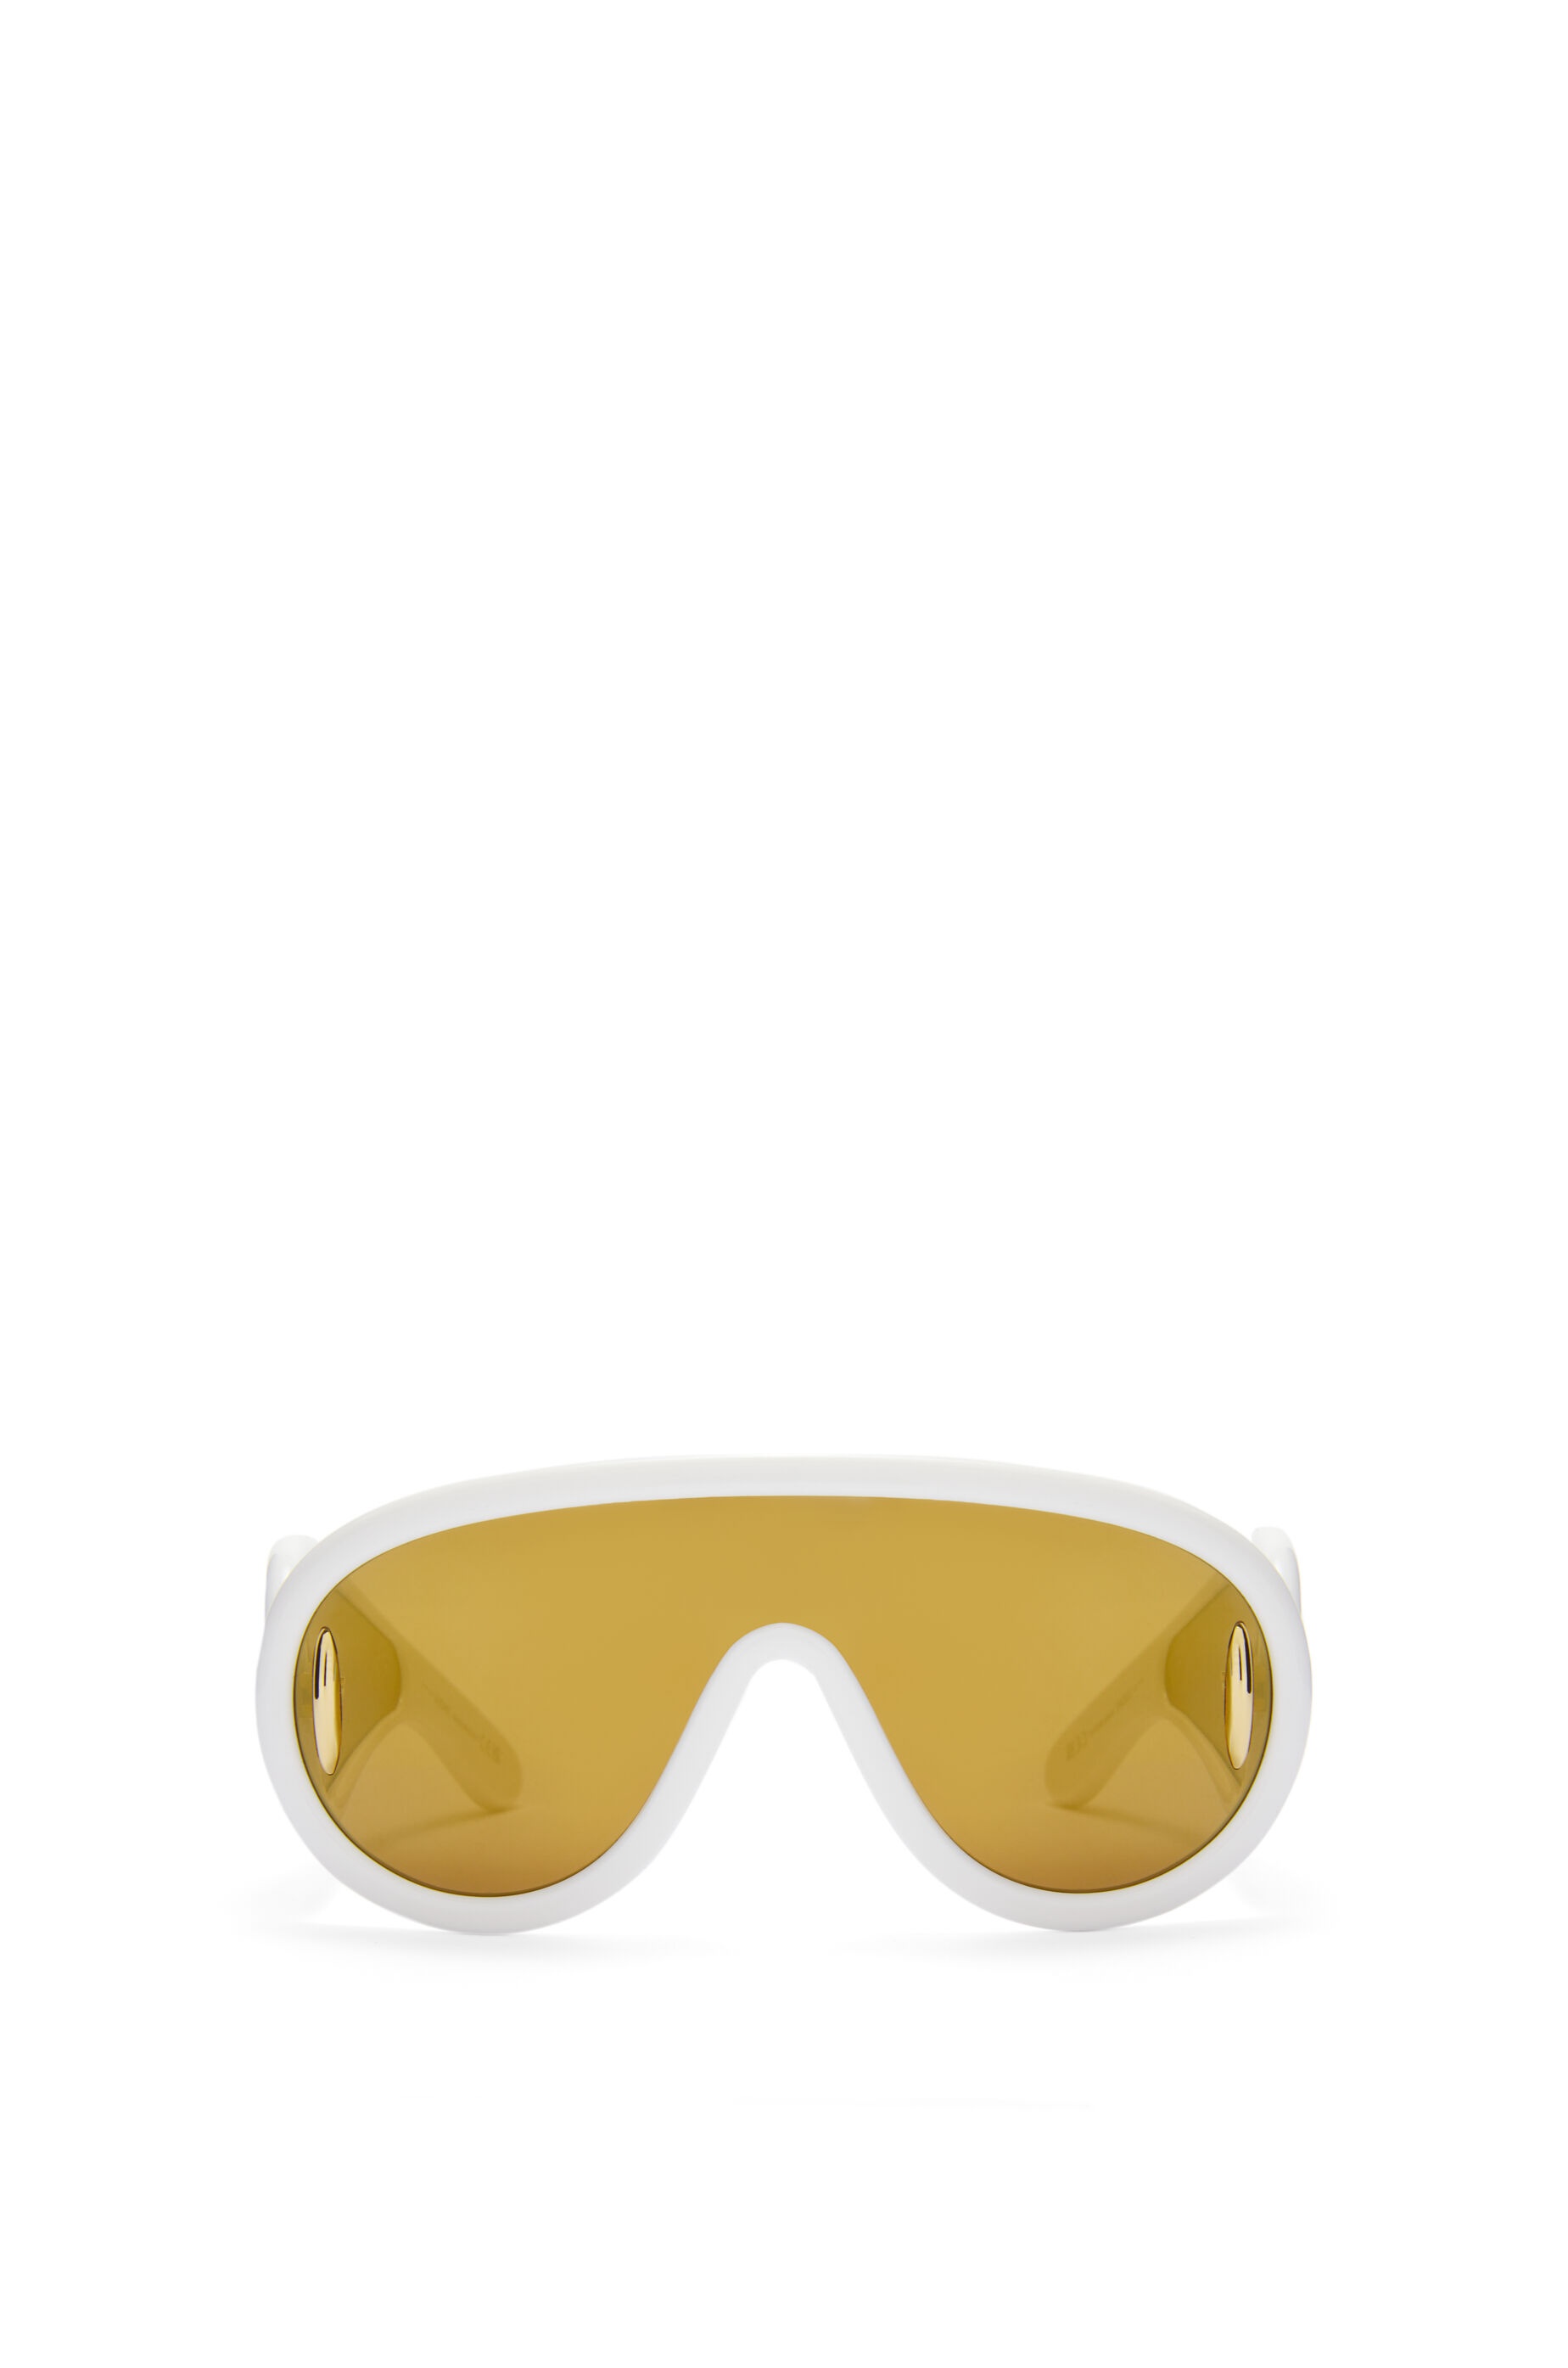 Wave mask sunglasses - 1